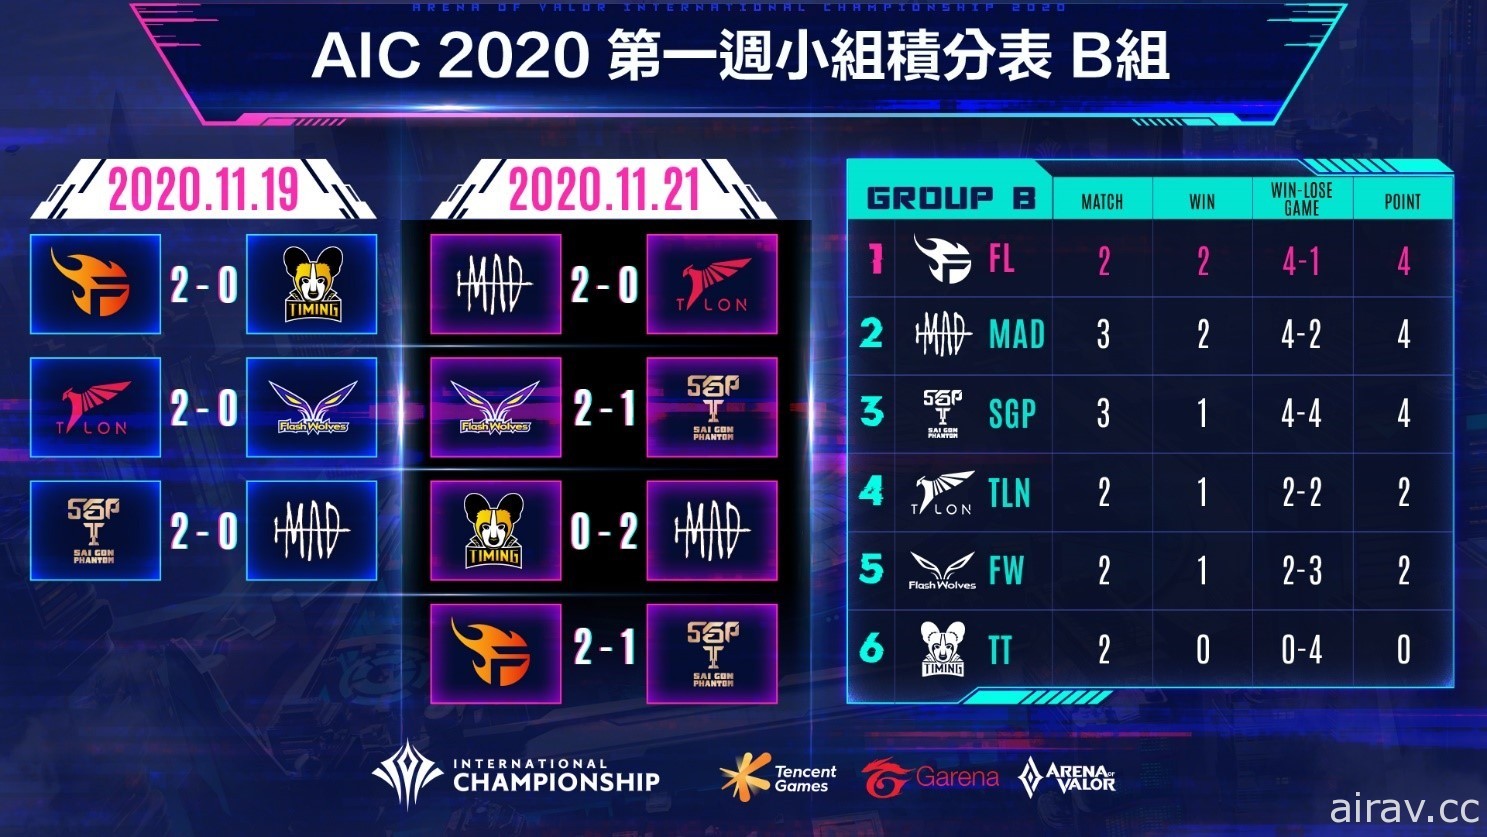 《Garena 傳說對決》AIC 2020 國際錦標賽小組賽 HKA 擊敗泰國宿敵 BRU 六連勝暫居 A 組第一